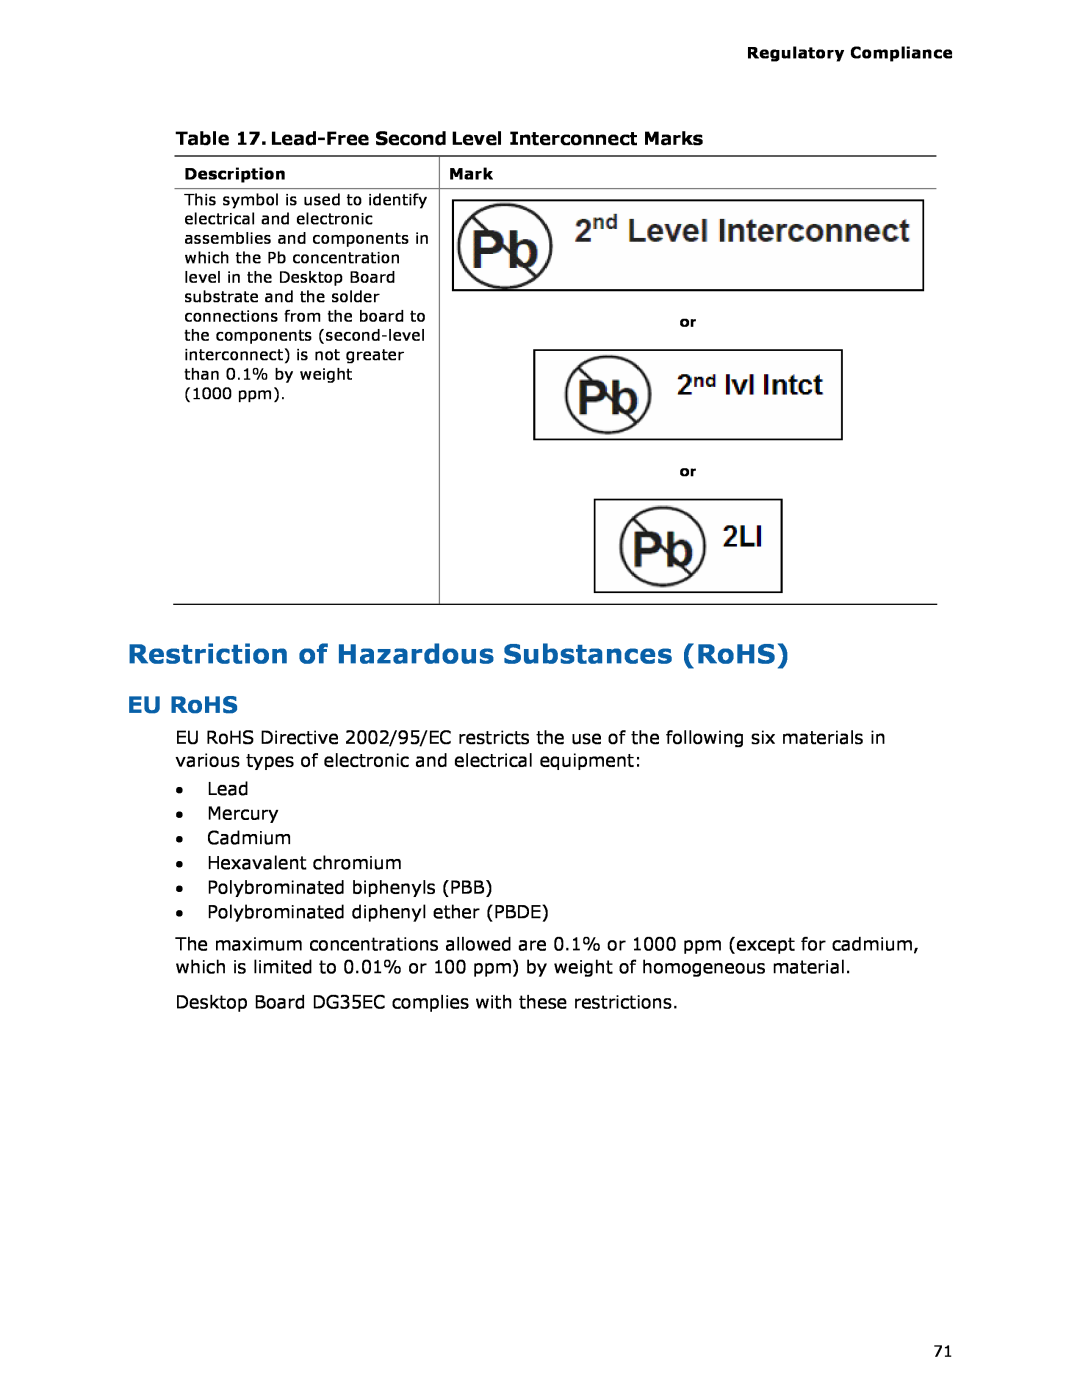 Intel DG35EC manual Restriction of Hazardous Substances RoHS, EU RoHS, Lead-Free Second Level Interconnect Marks 